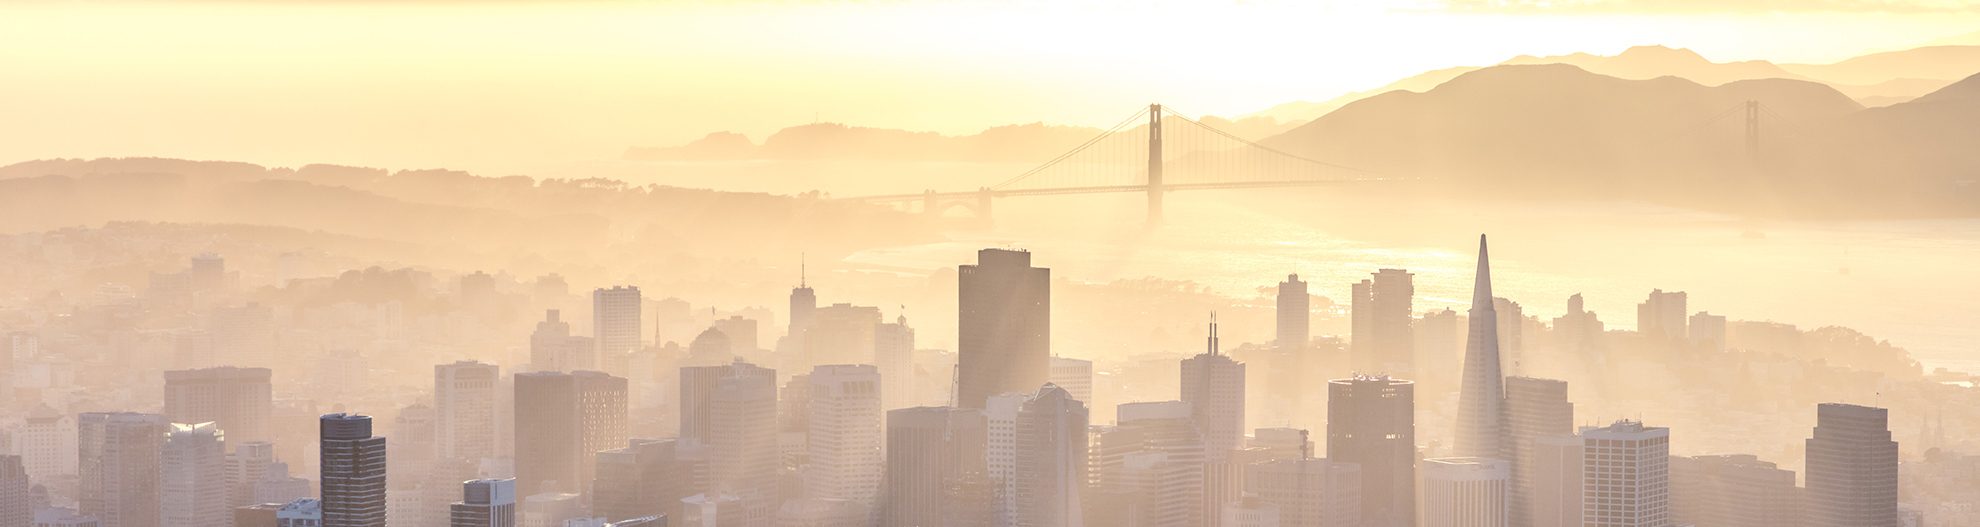 San Francisco skyline at dawn